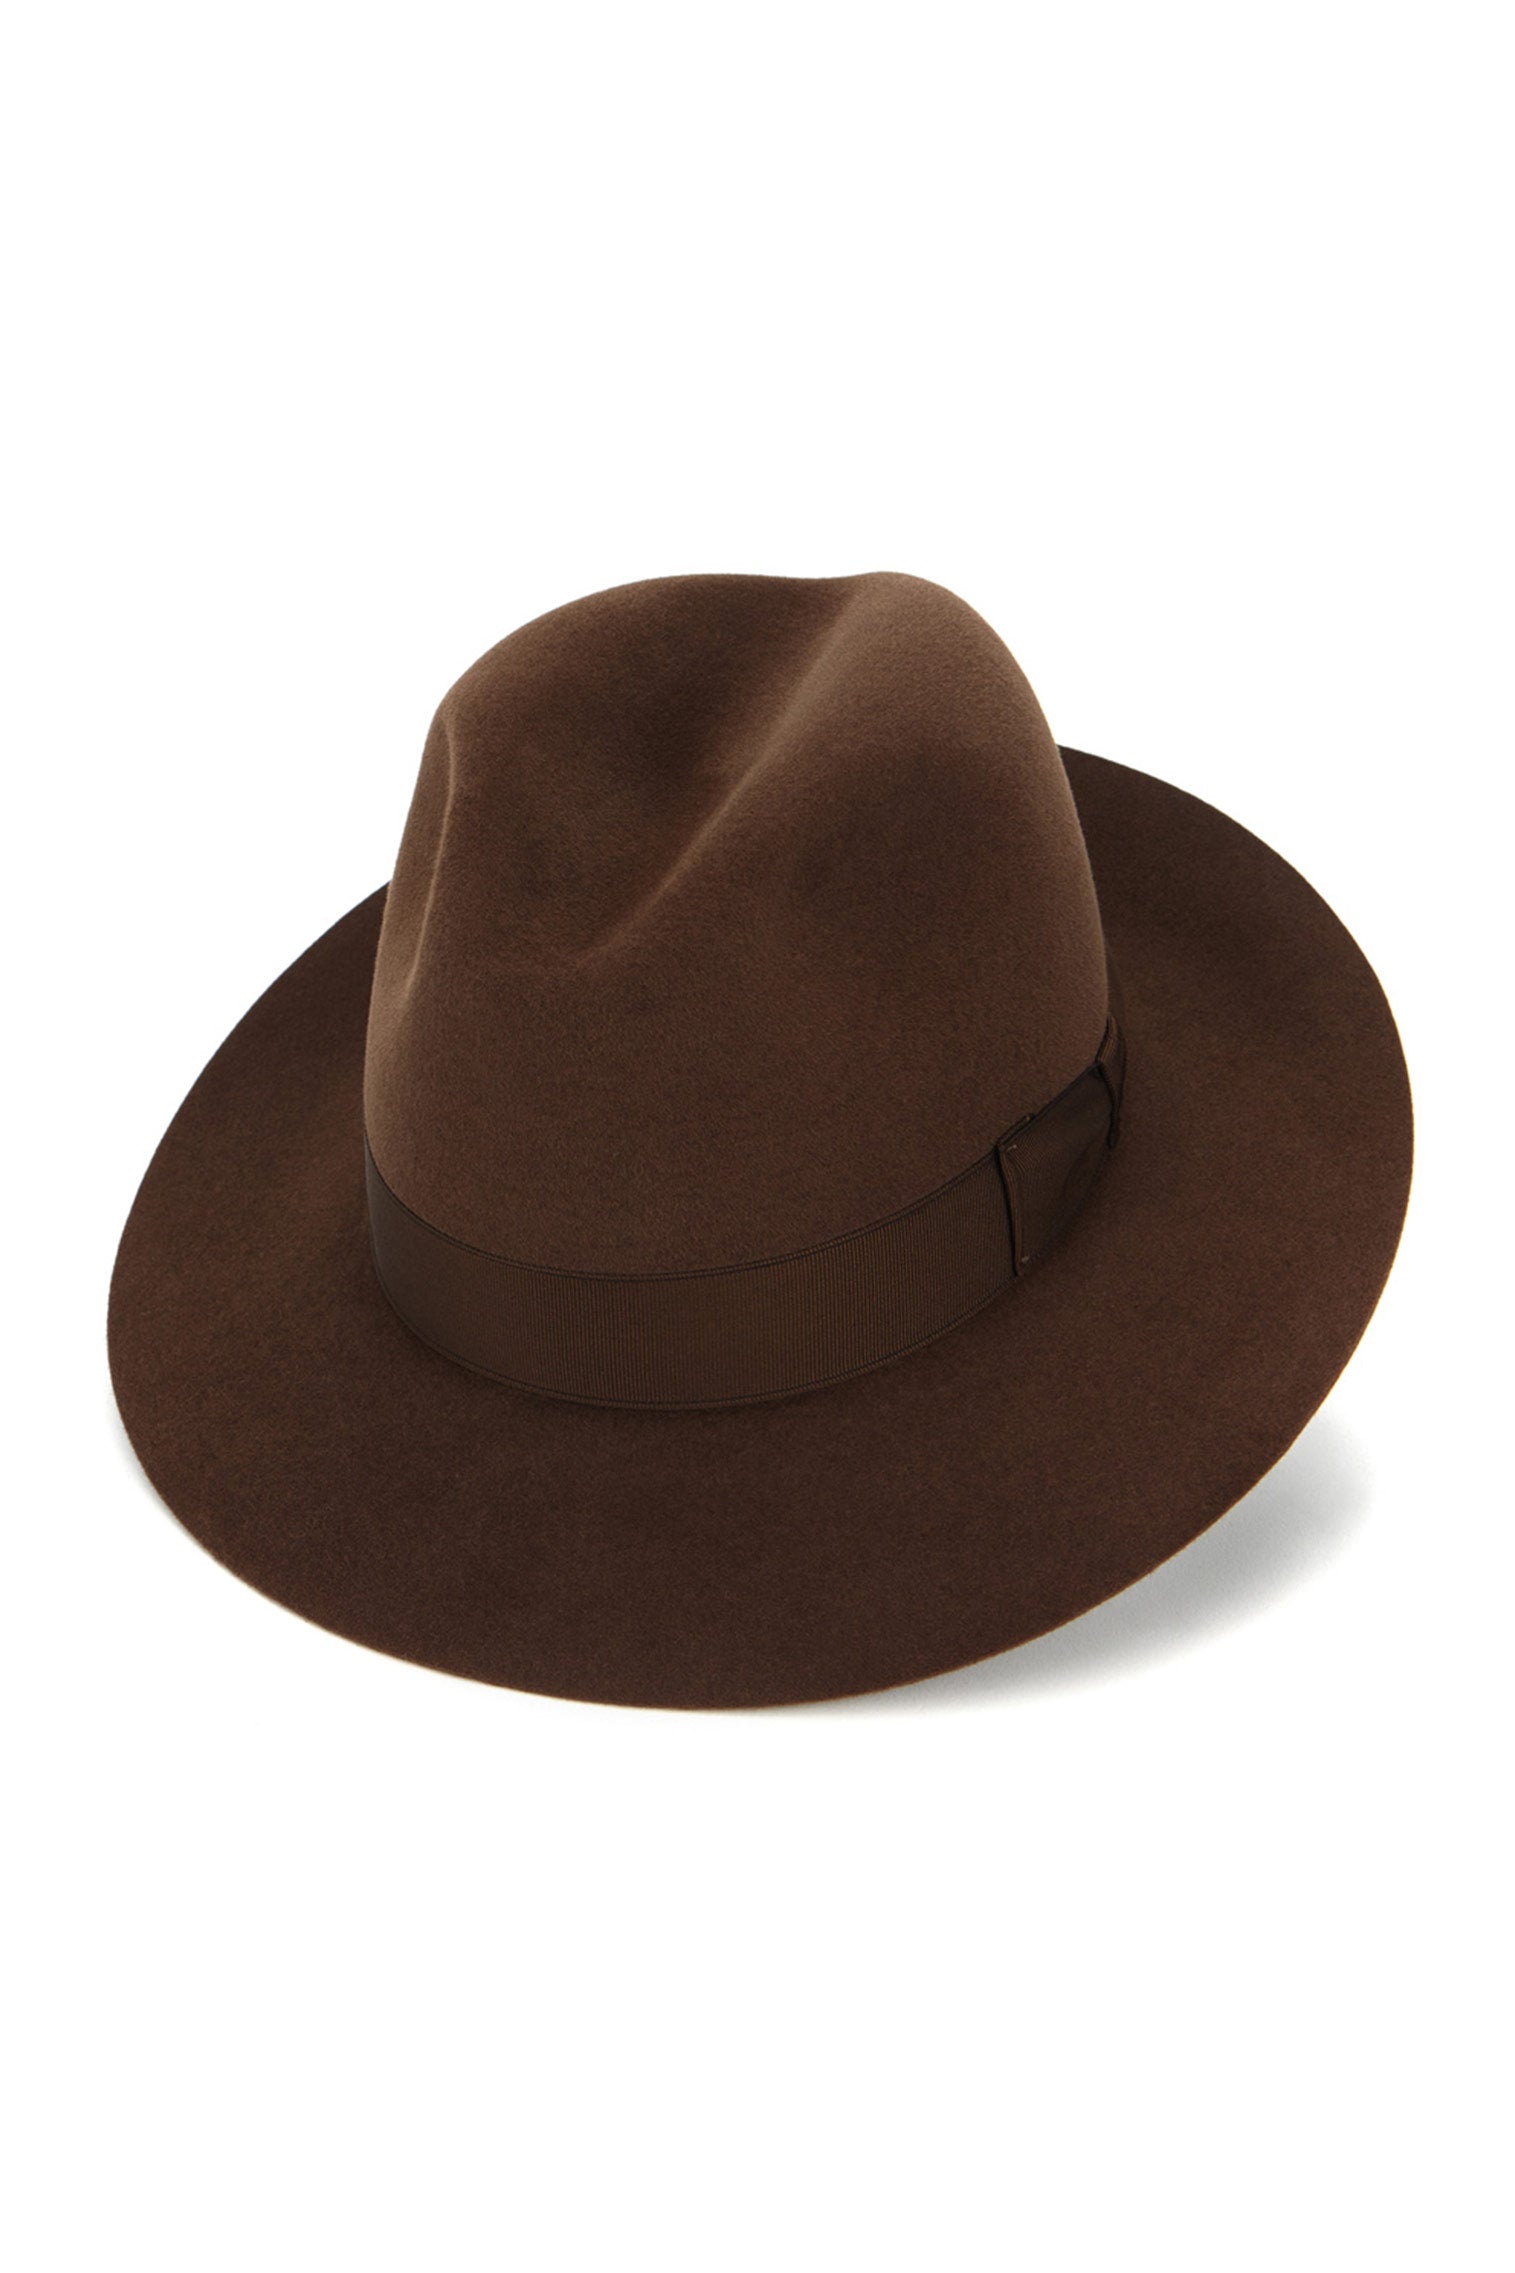 Haydock Fedora - Hats for Round Face Shapes - Lock & Co. Hatters London UK